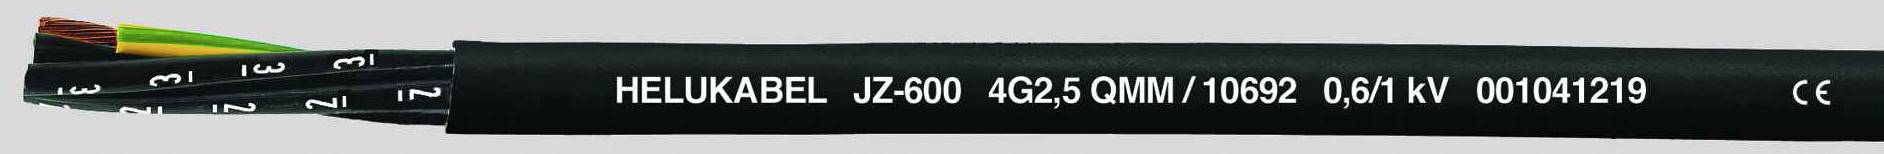 HELUKABEL JZ-600 Steuerleitung 10 G 1.50 mm² Schwarz 10668-500 500 m